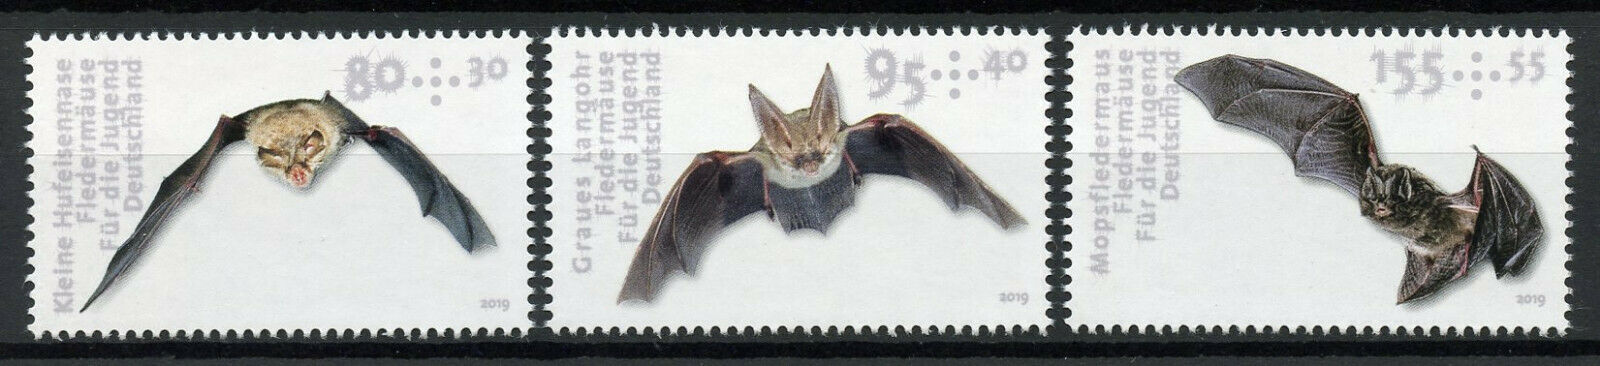 Germany 2019 MNH Youth S.P. Bats Bat 3v Set Mammals Wild Animals Stamps